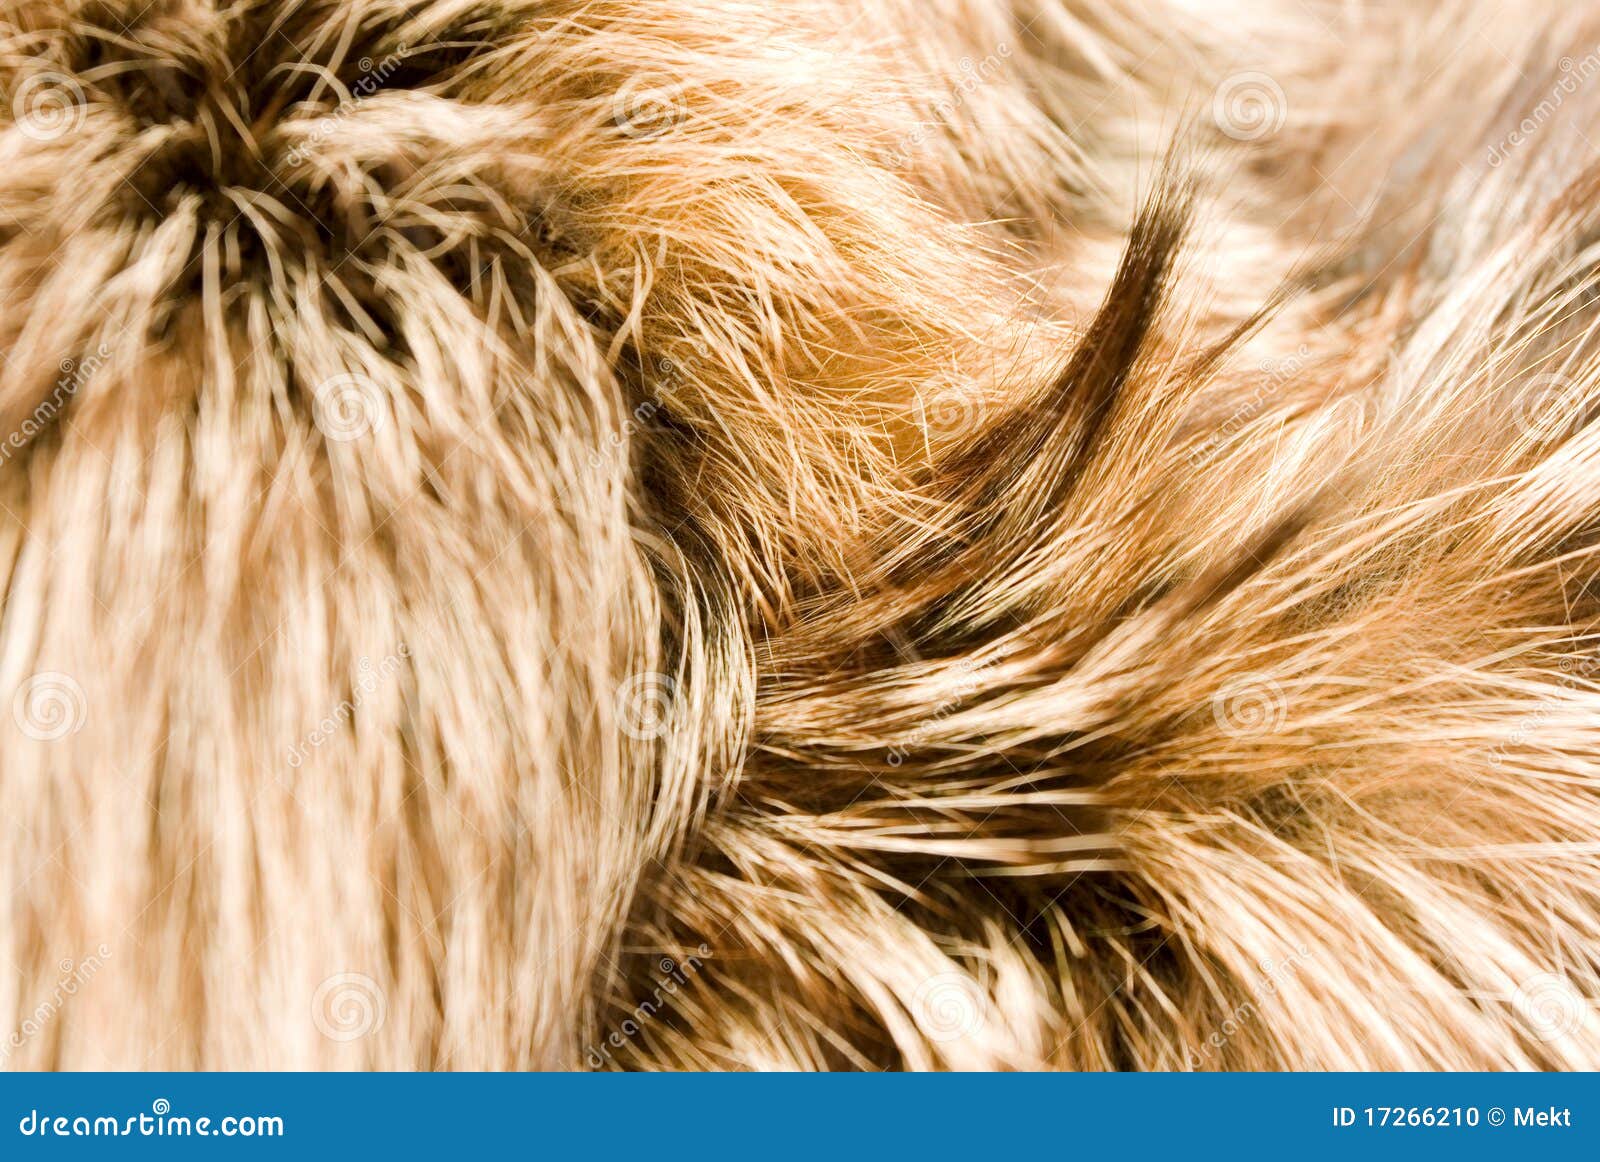 Furs background stock photo. Image of designer, skin - 17266210